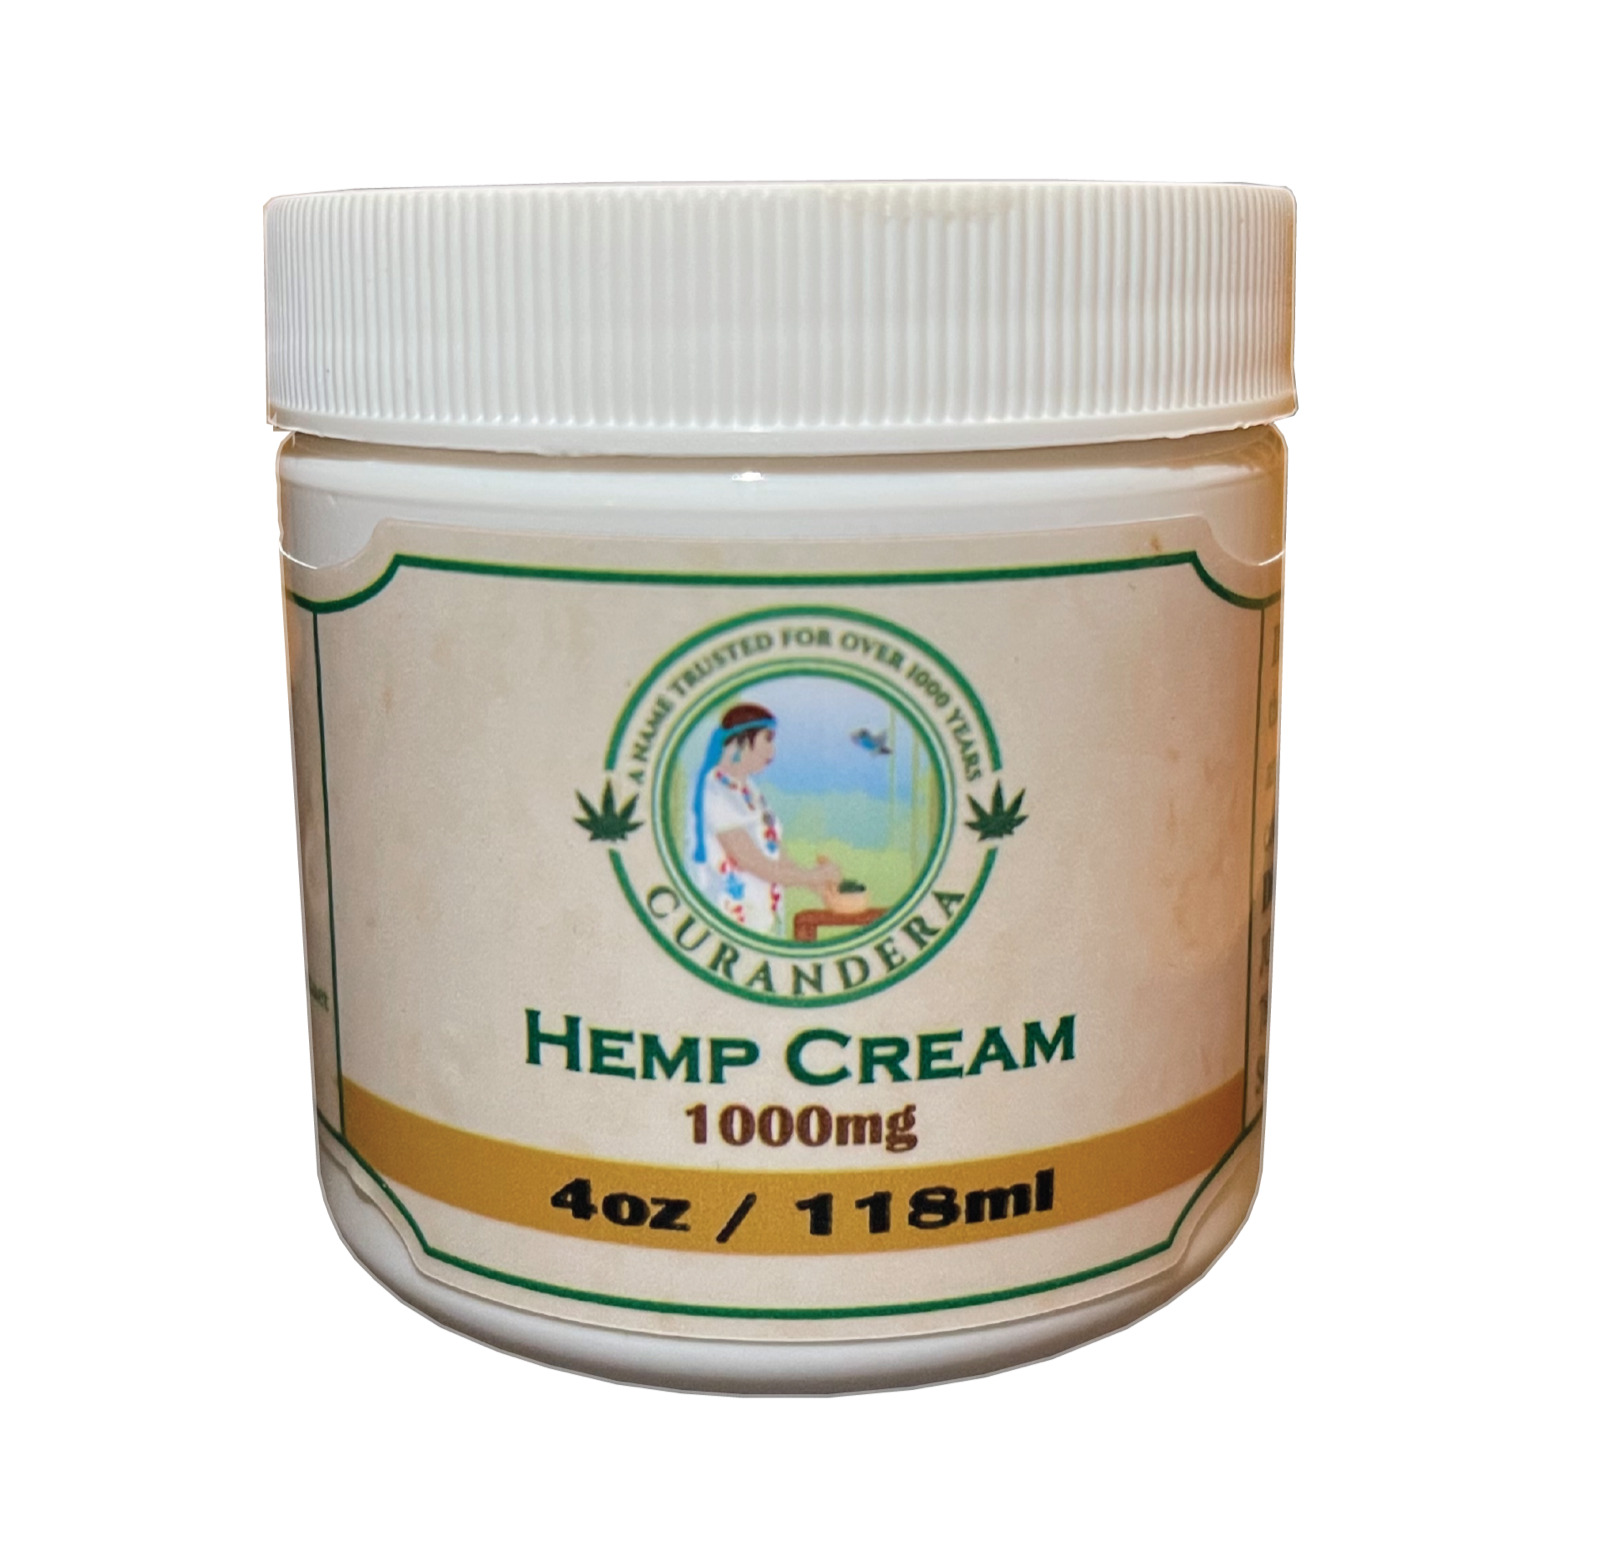 Curandera Hemp Cream - Made in USA - 4 fl oz - Cream for Discomfort 